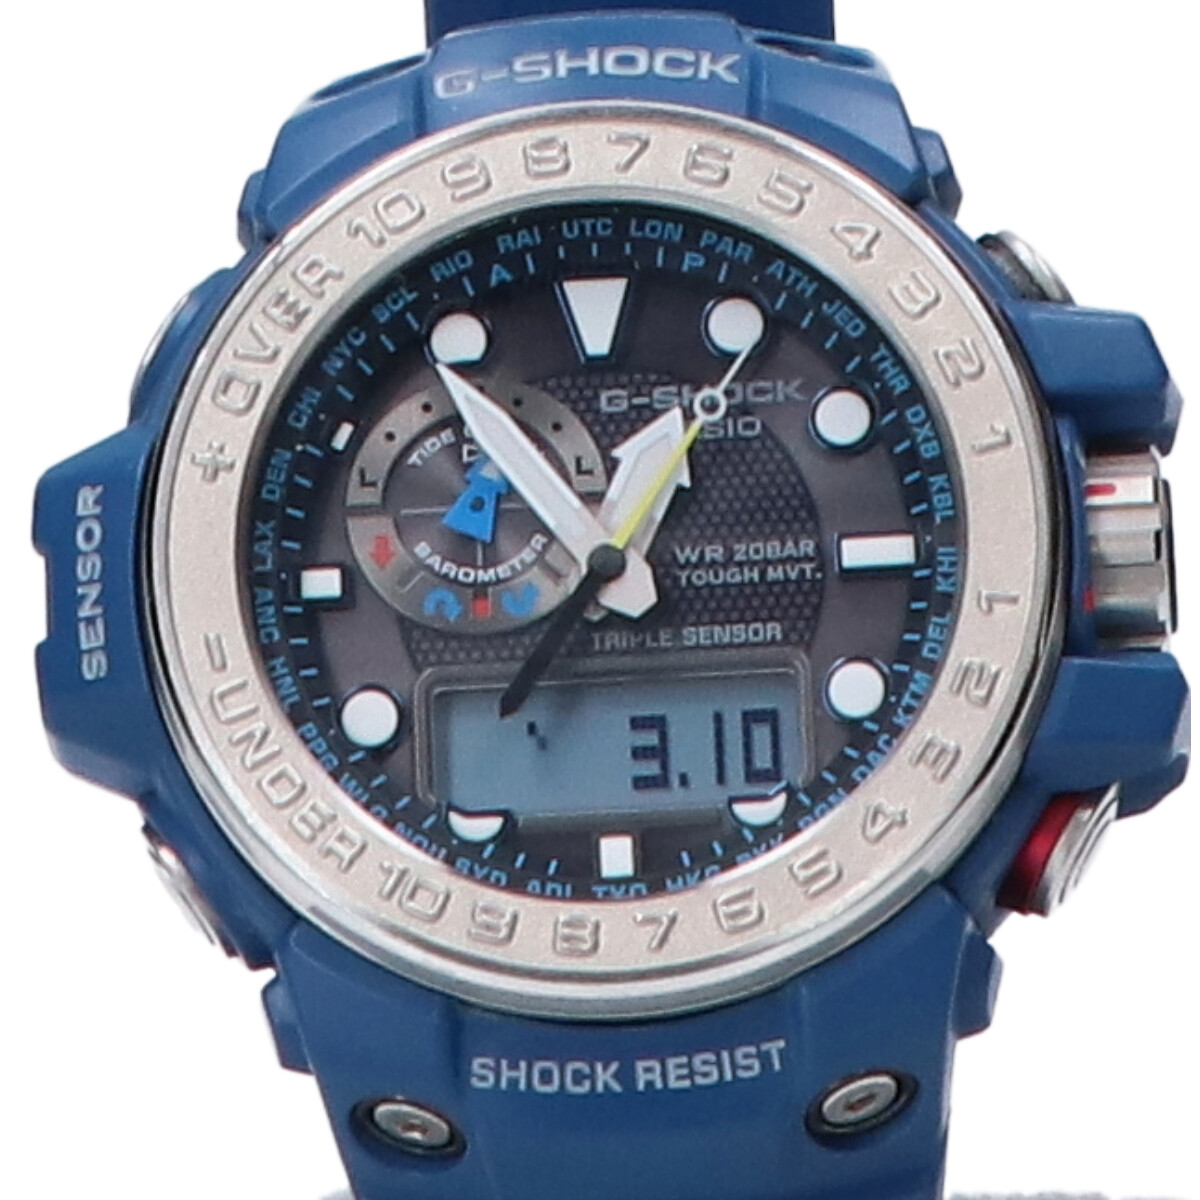 G-SHOCKのGWN-1000-2AJF GULFMASTER/ガルフマスター Triple Sensor タフソーラー電波腕時計 ブルー×シルバーの買取実績です。